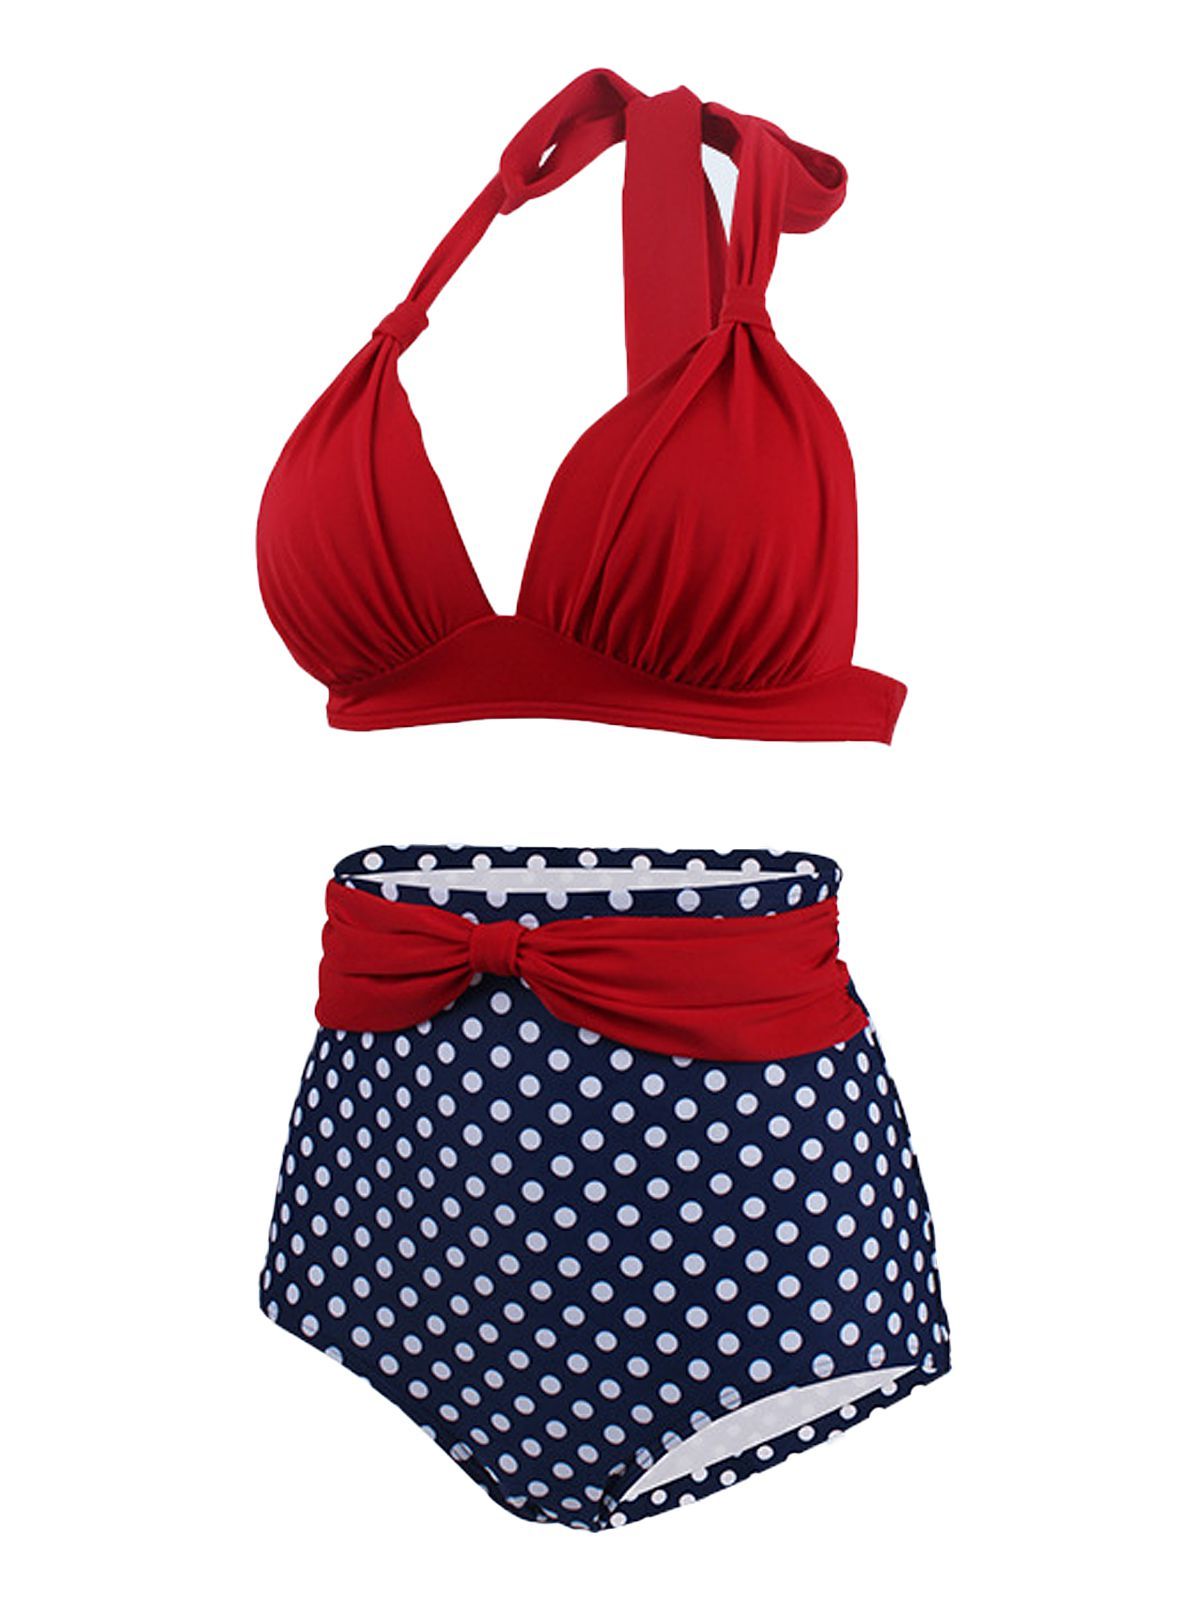 Upopby Polka Dot Pleated Halter Bikini Plus Size Swimsuit side view